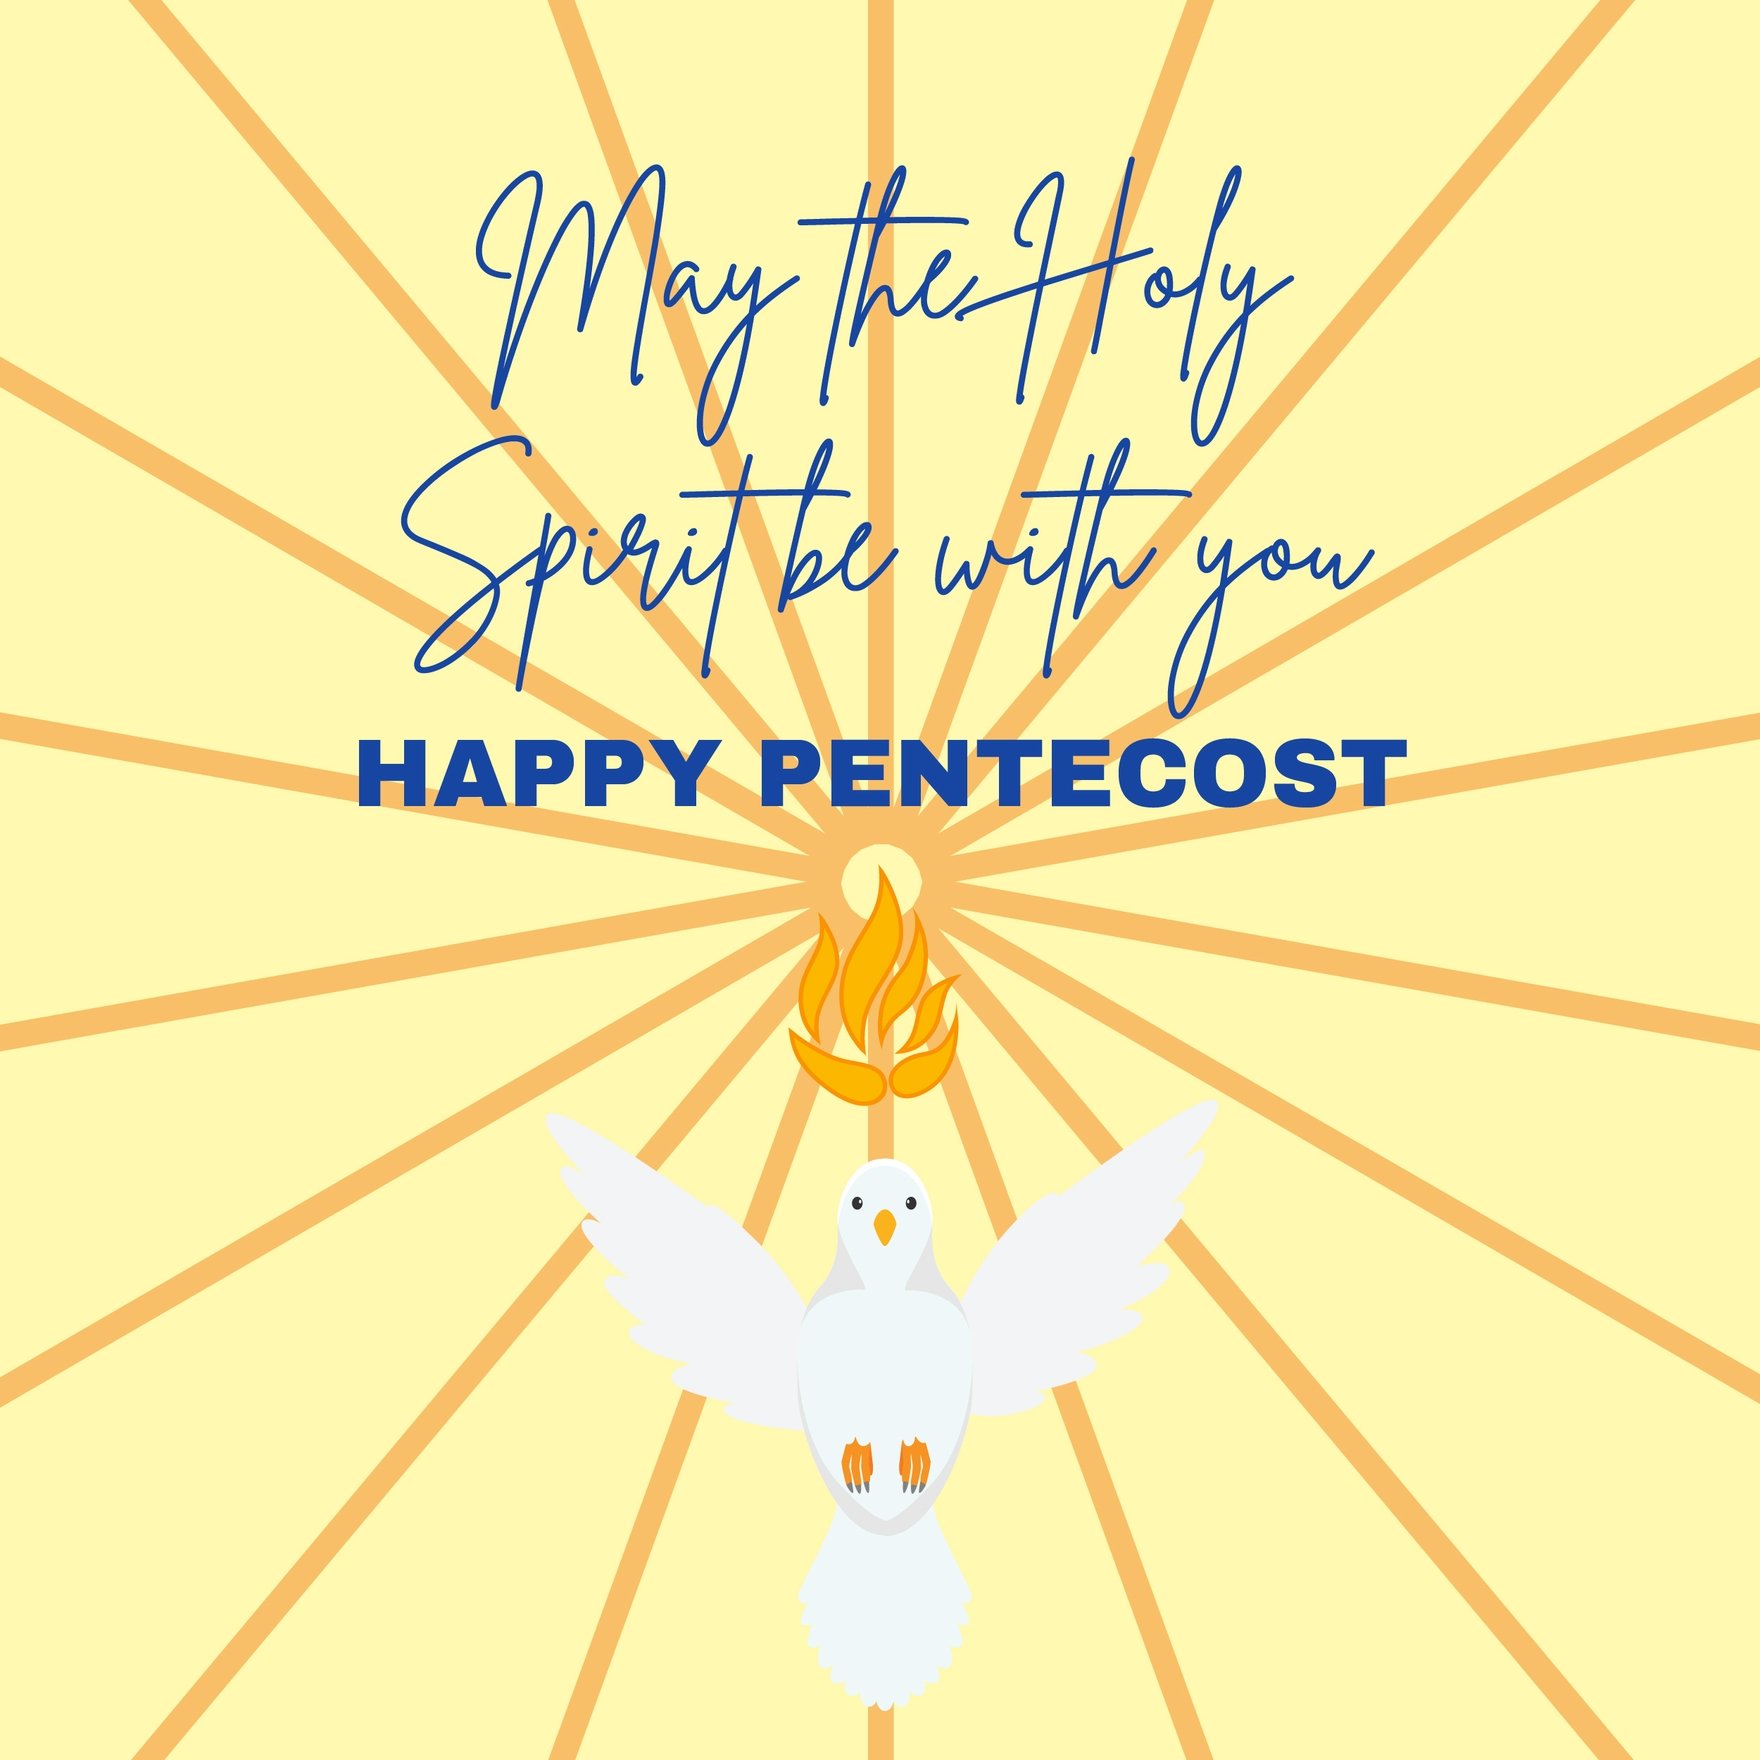 Free Pentecost Whatsapp Post in Illustrator, PSD, EPS, SVG, JPG, PNG